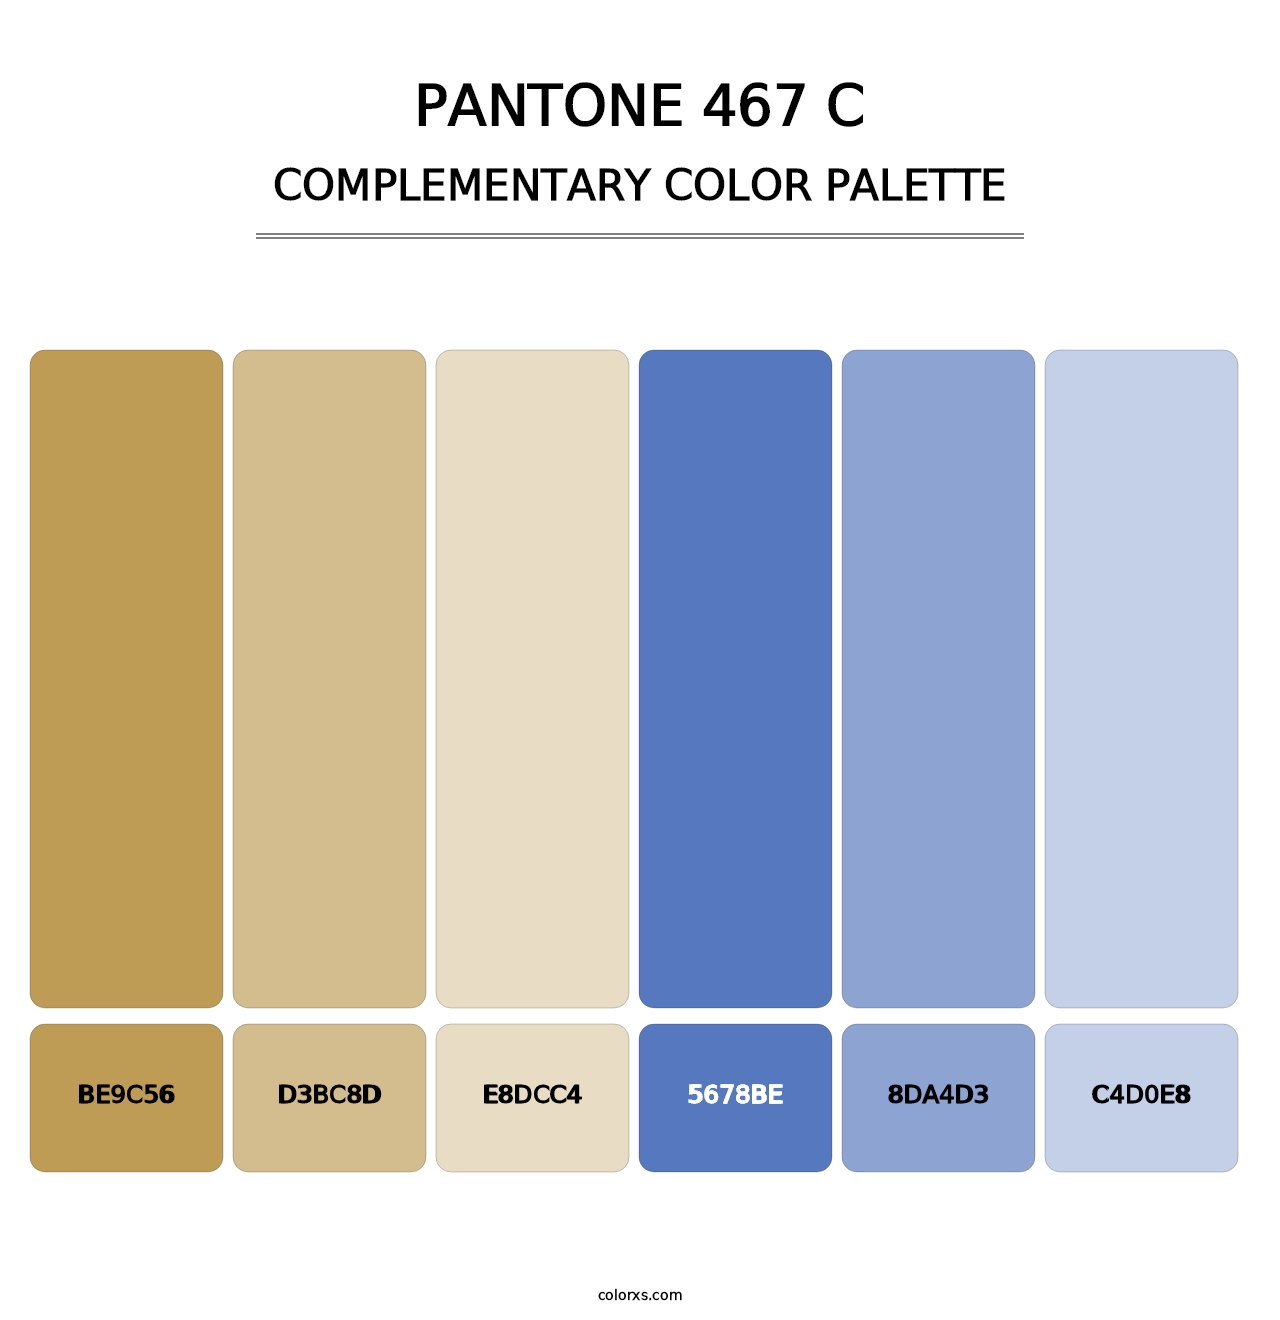 PANTONE 467 C - Complementary Color Palette